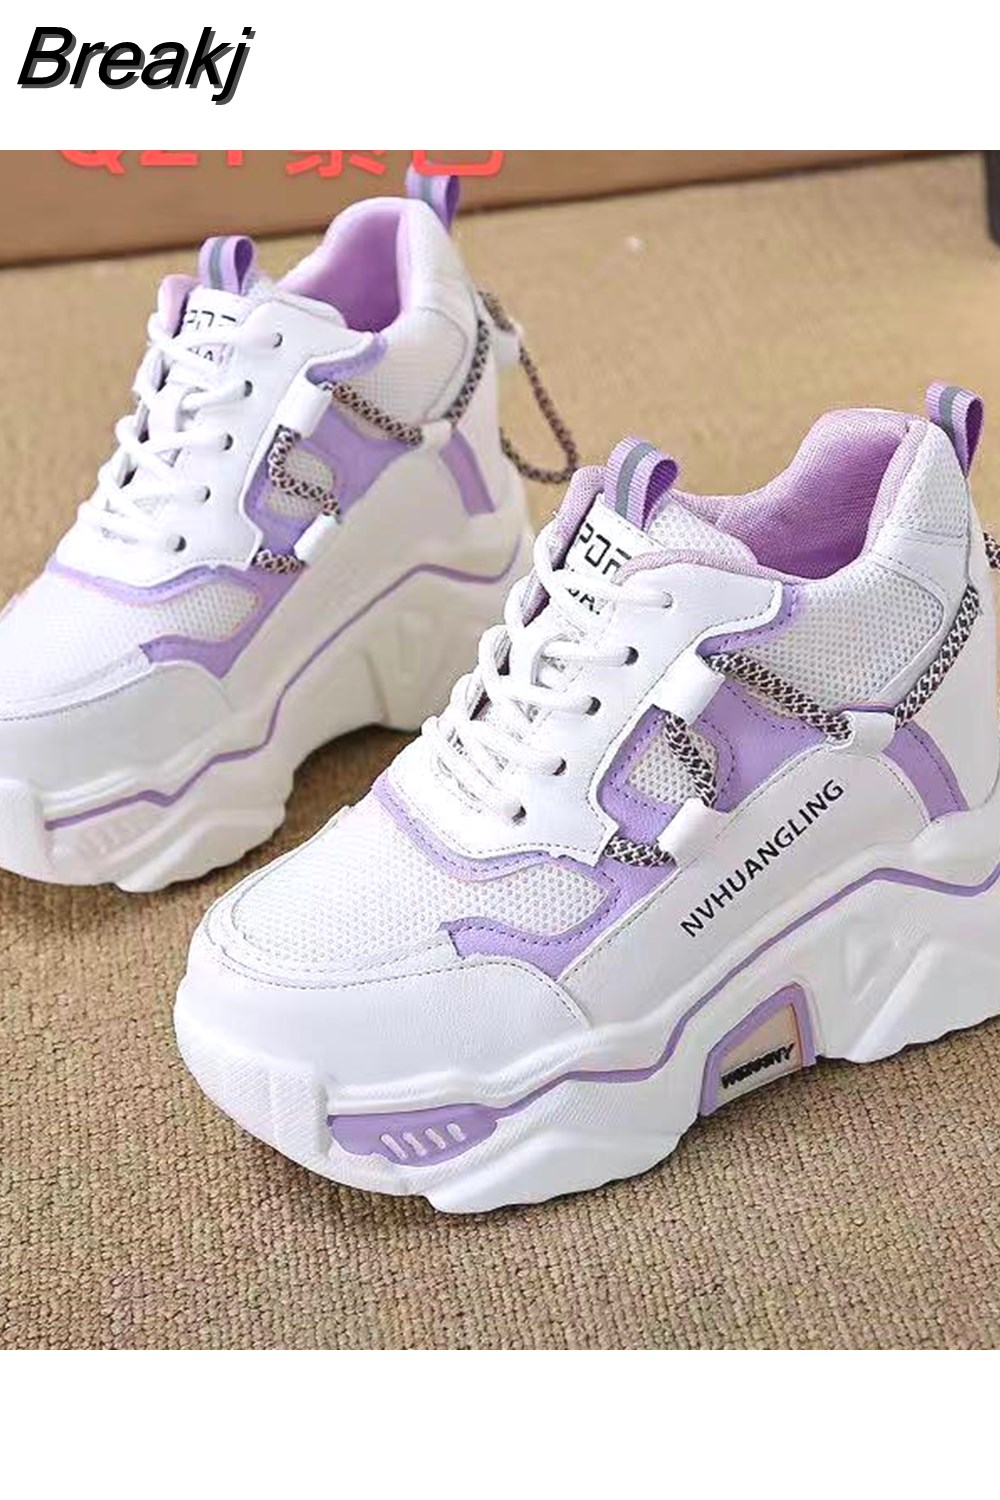 Breakj Fashion Sneakers Women Shoes Platform Women Mesh Breathable ...